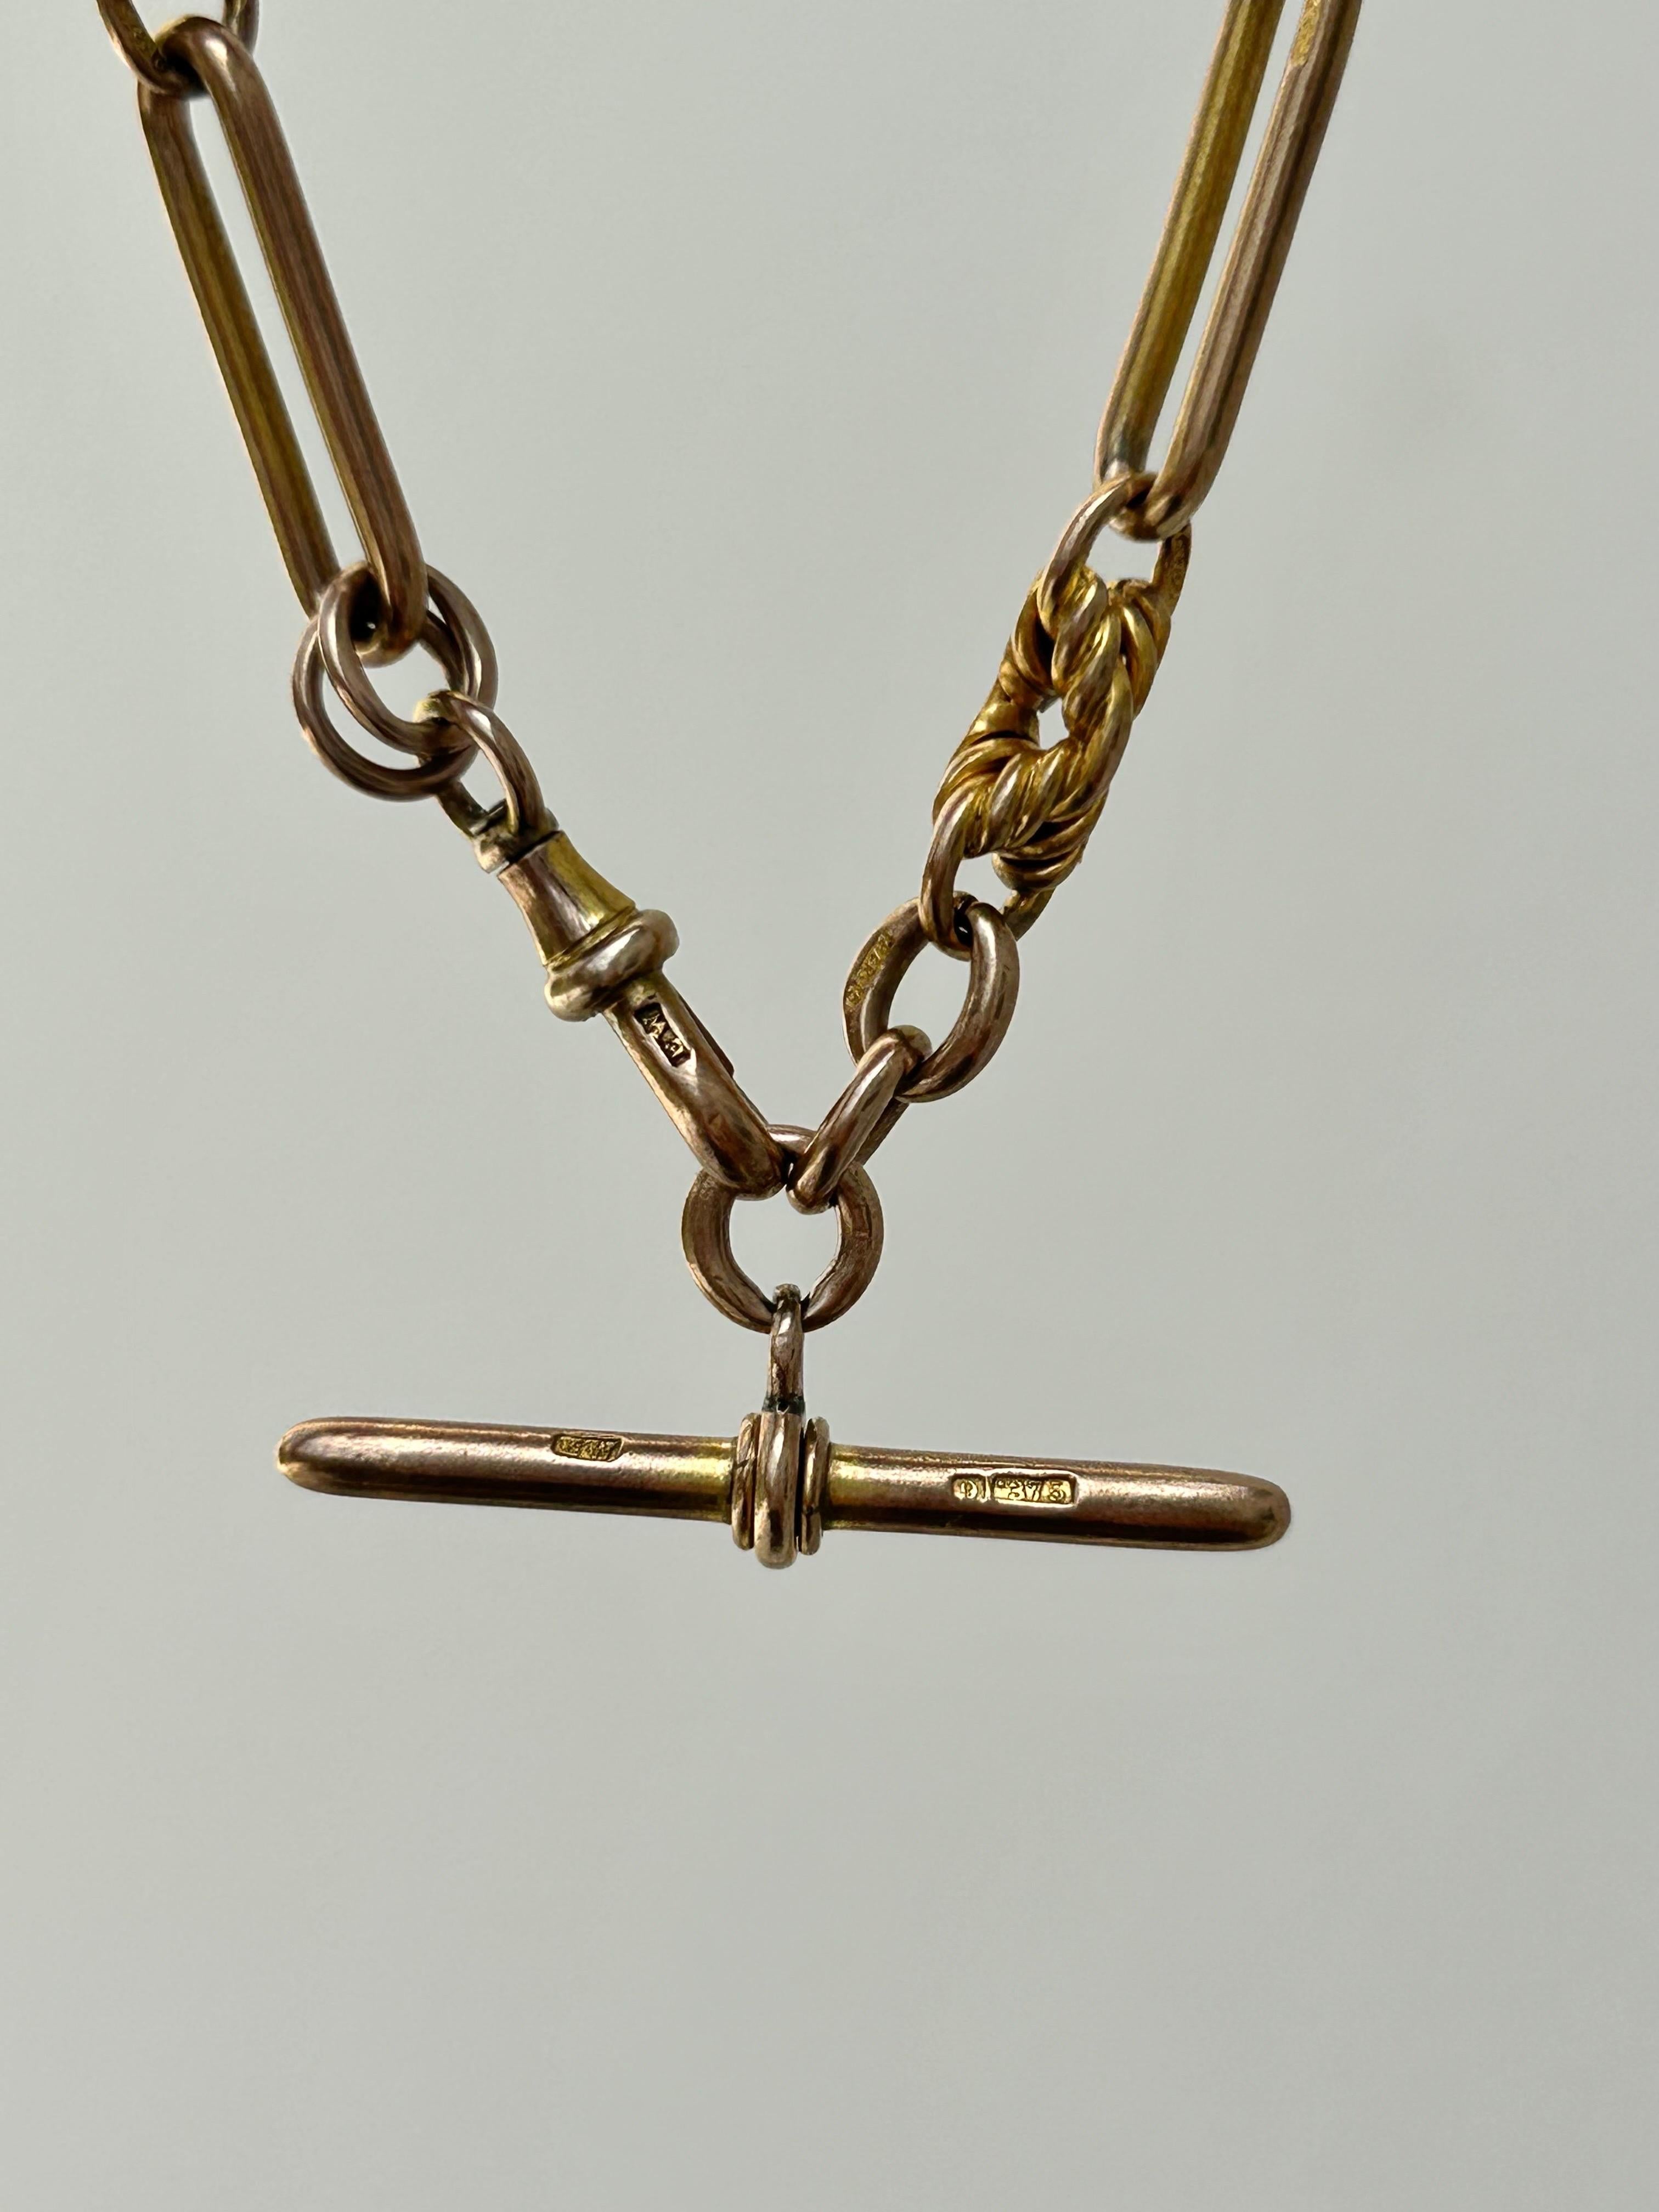 trombone link chain